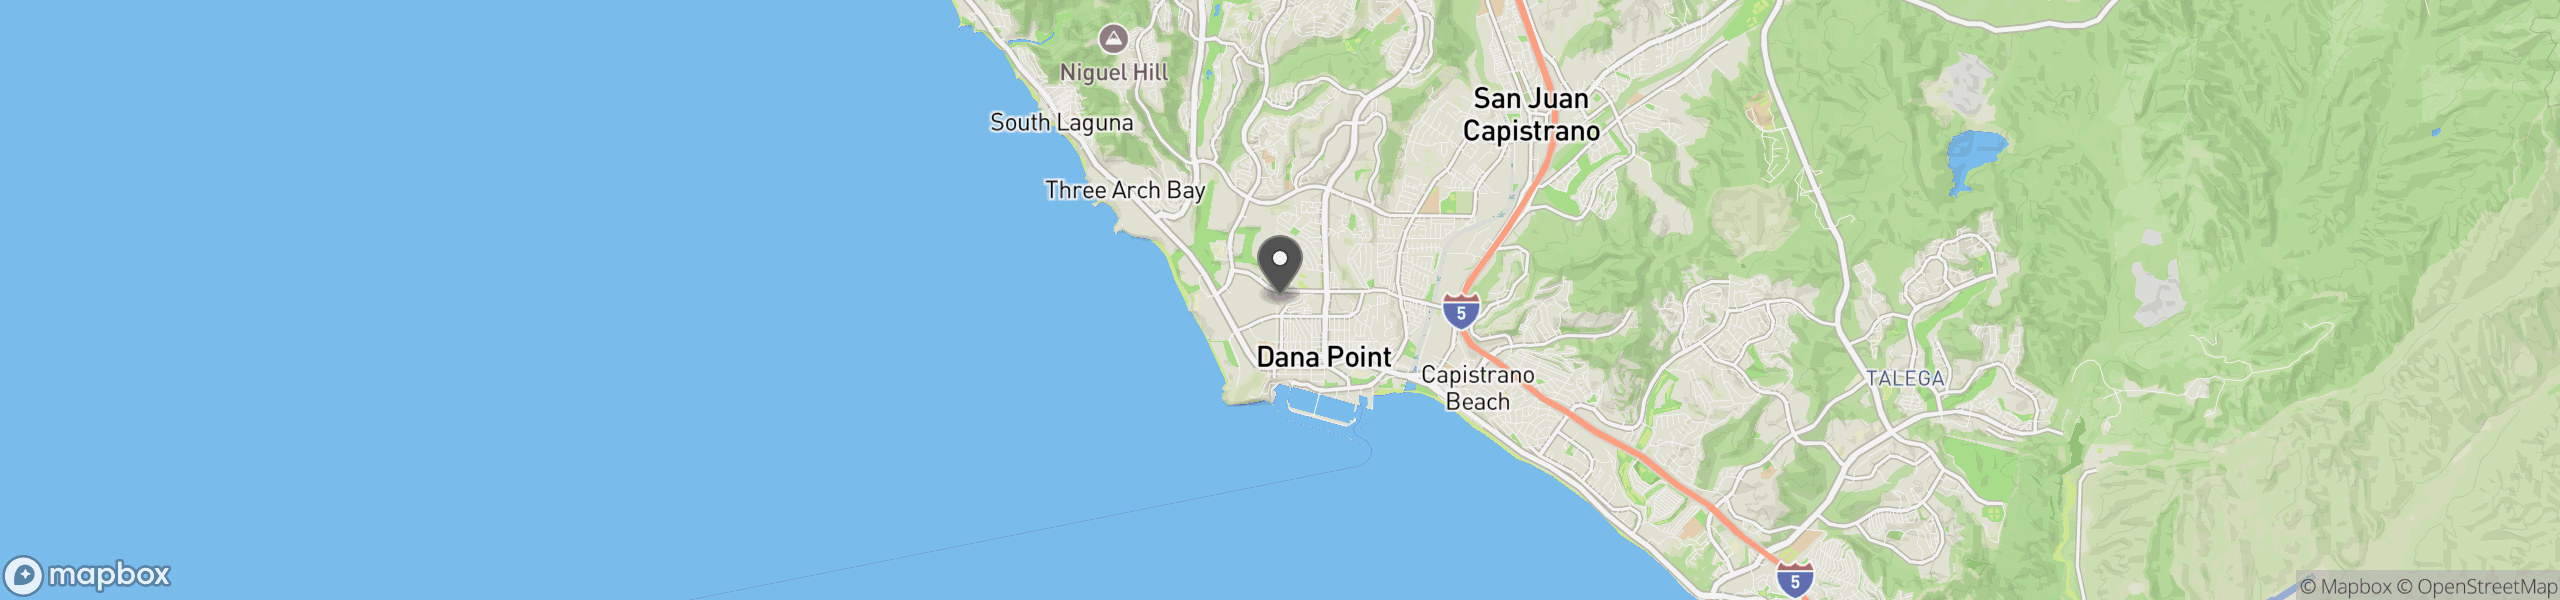 Dana Point, CA 92629